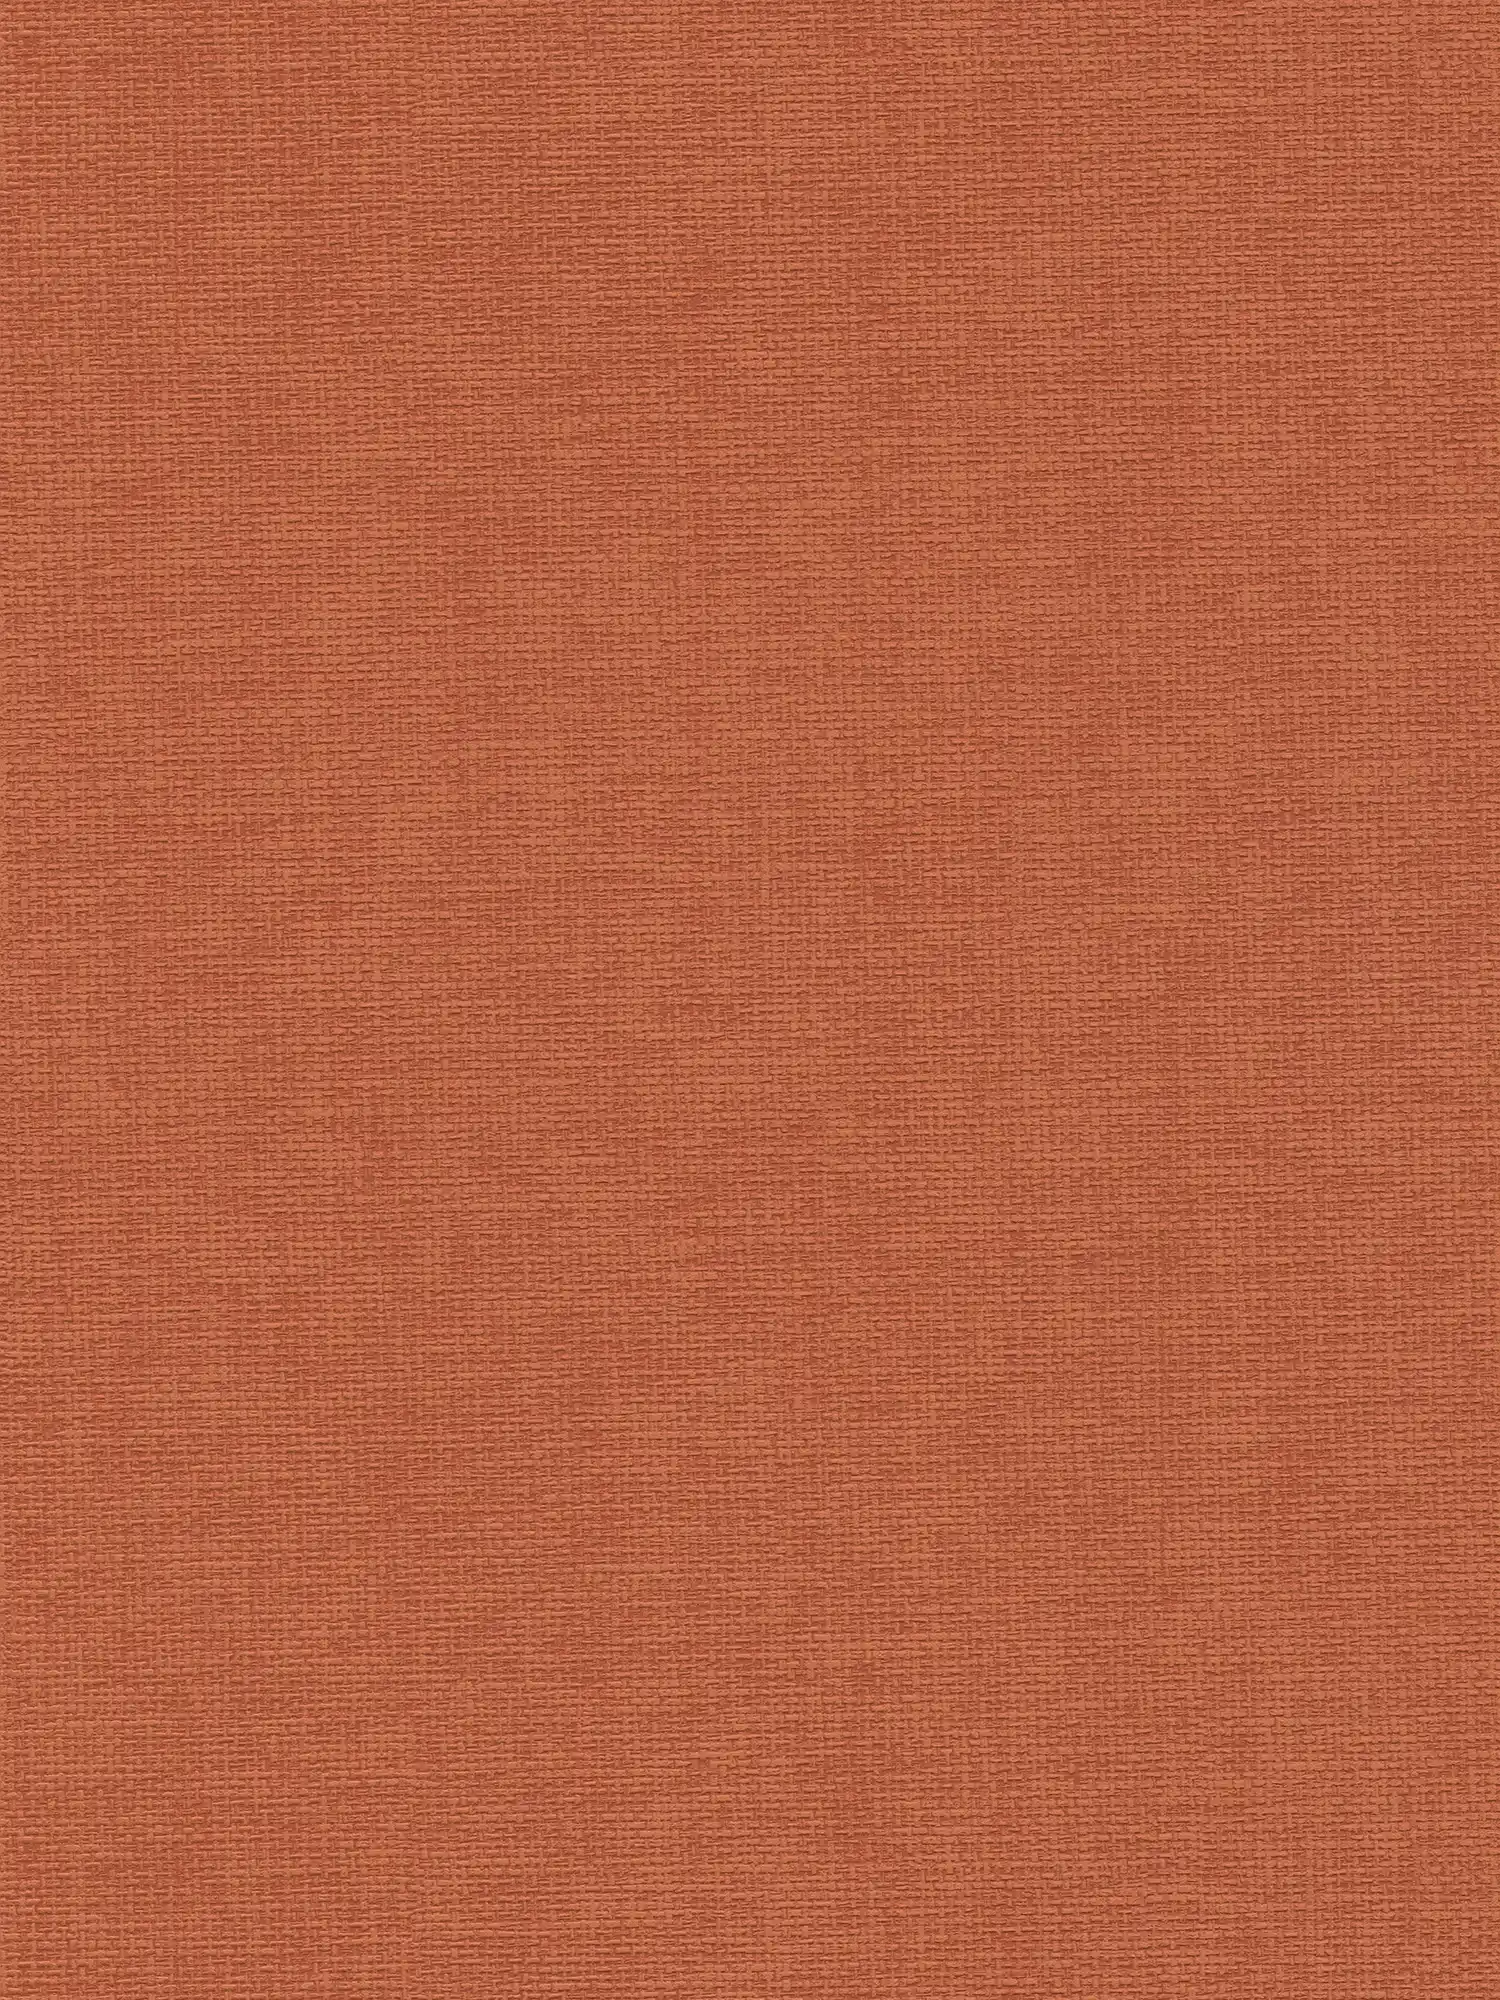 Orangerote Tapete mit Textilstruktur – Rot
